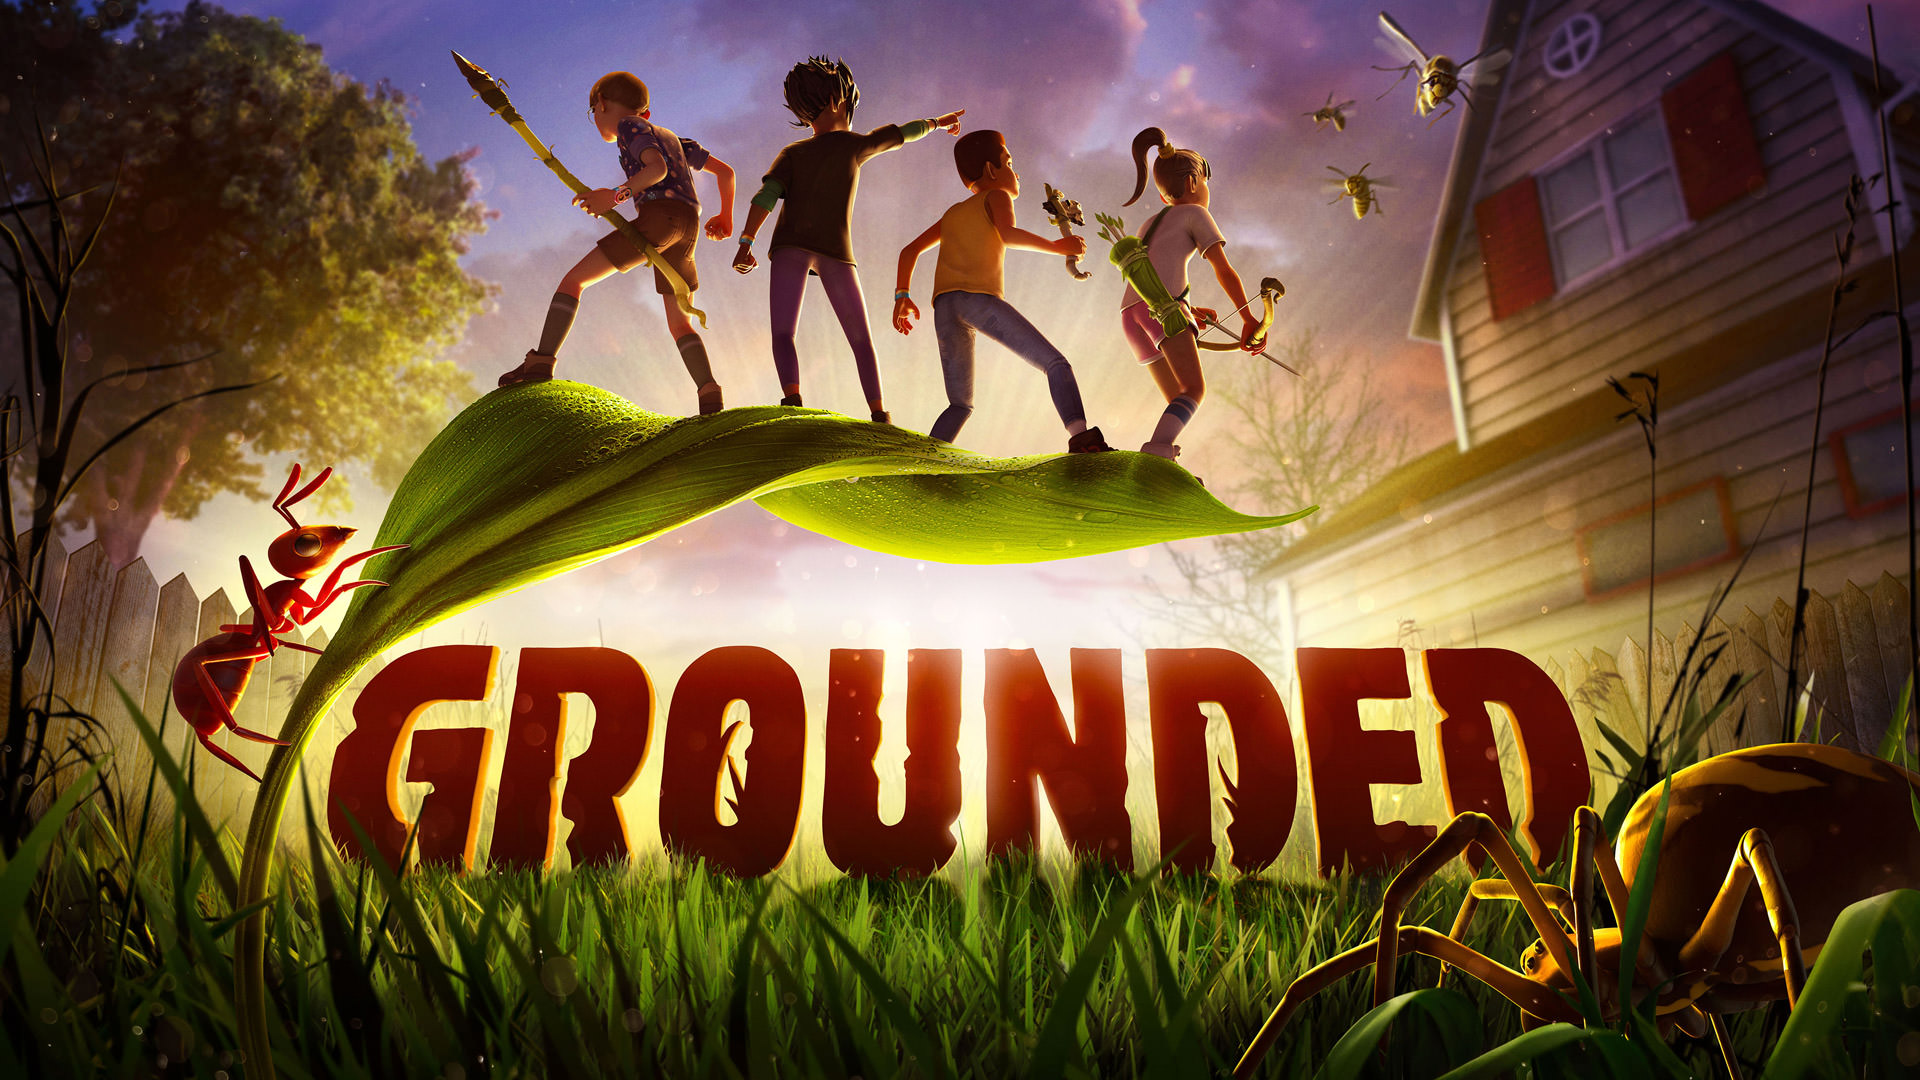 ساخت سریال انیمیشنی براساس بازی Grounded 